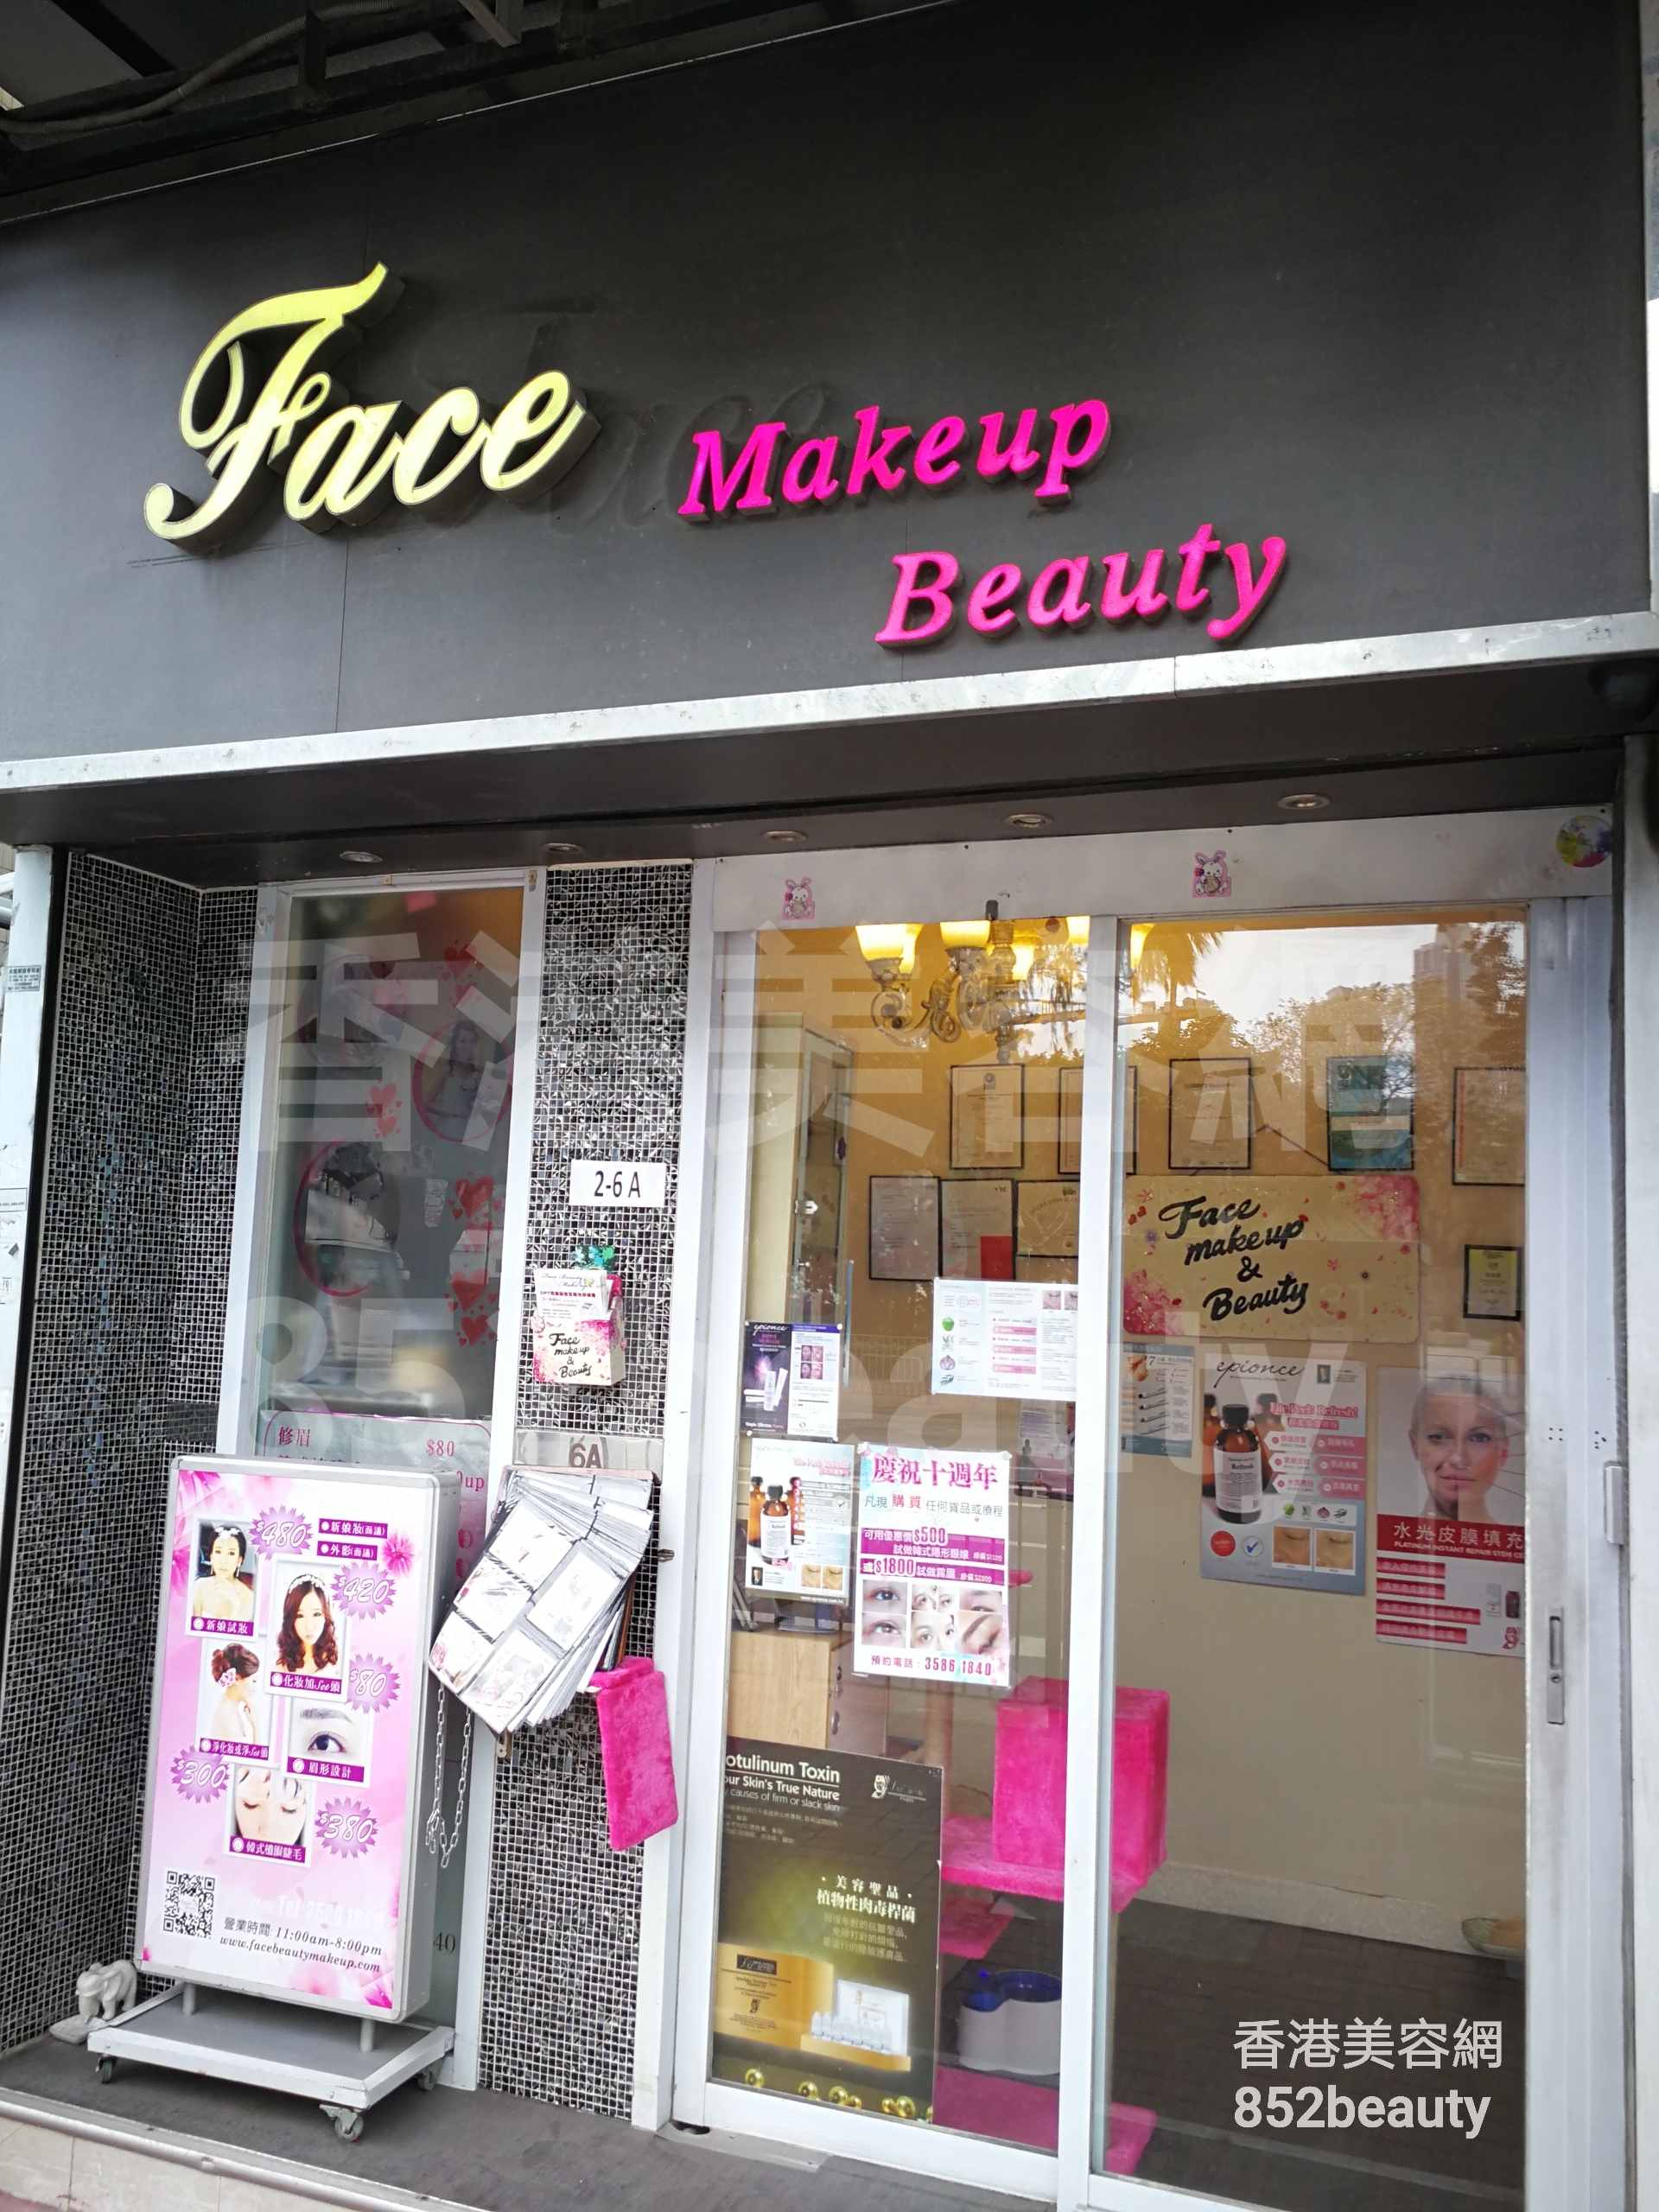 美容院 Beauty Salon: Face Makeup Beauty